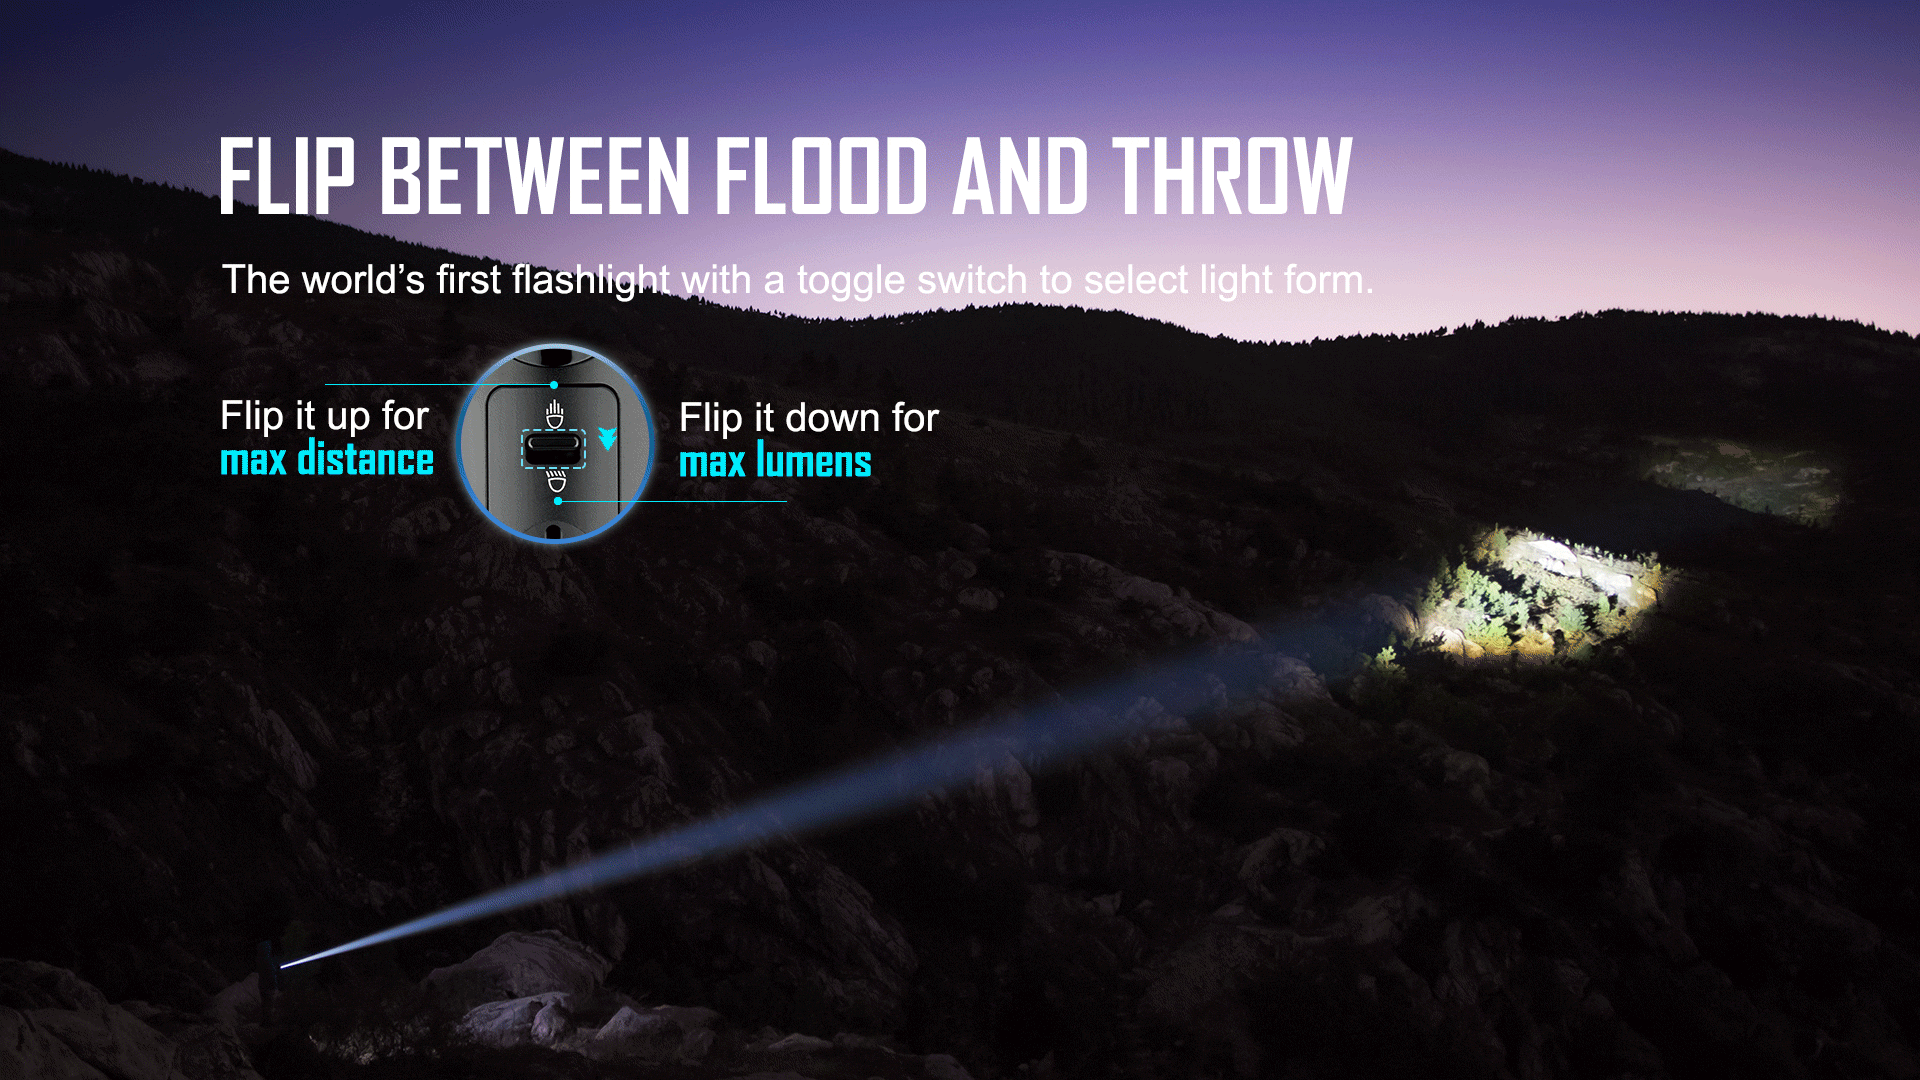 Flip between flood and throw